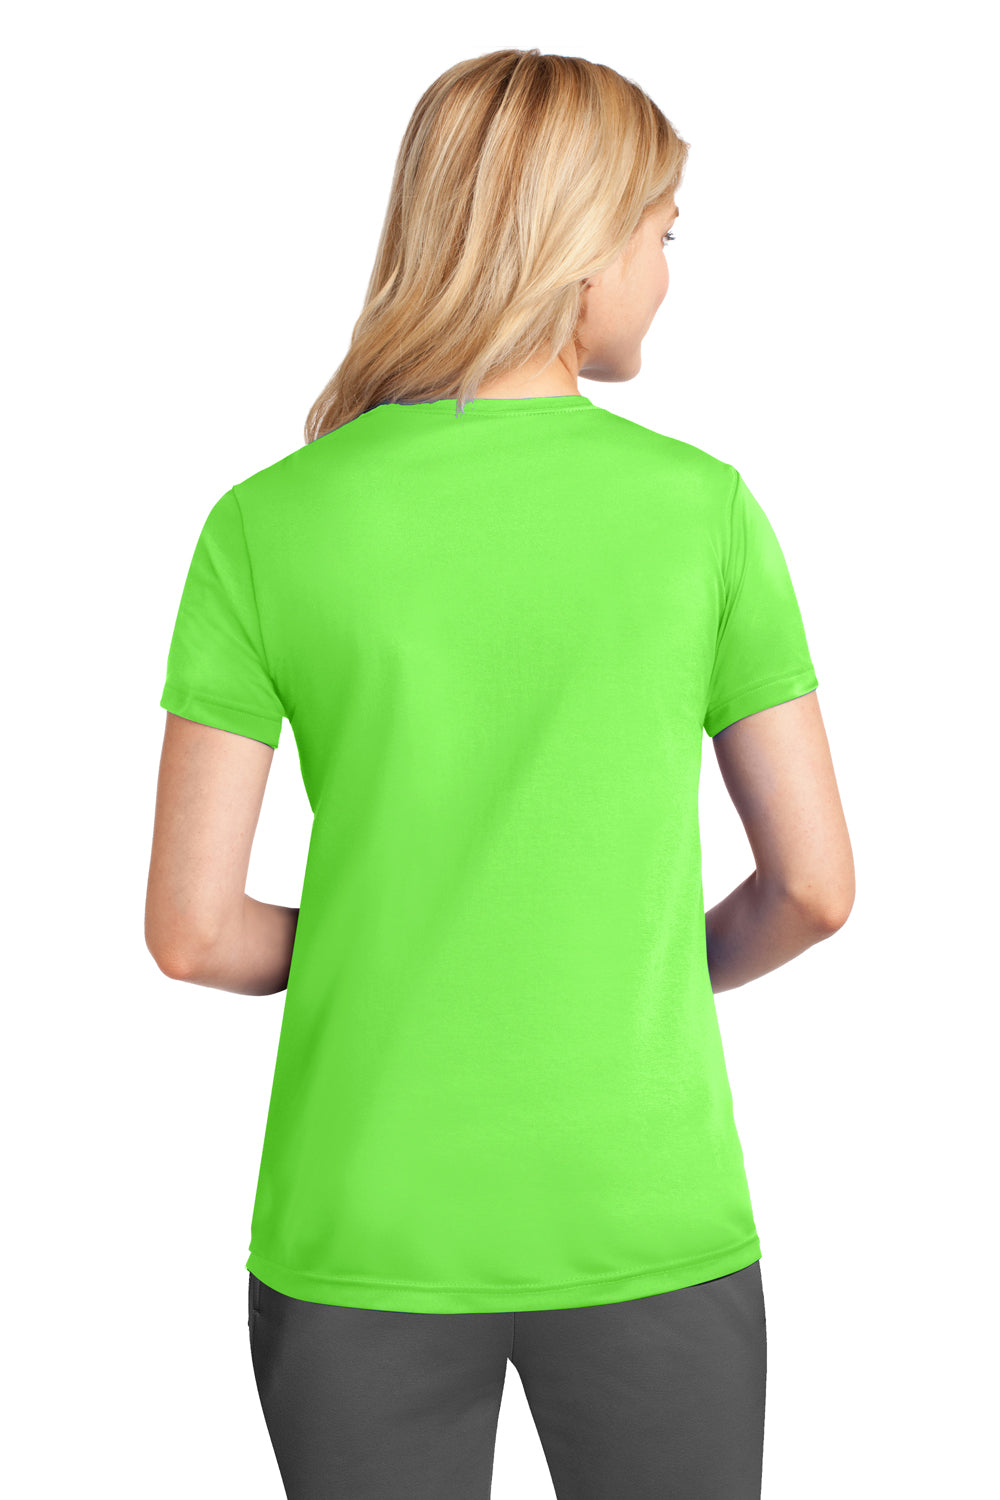 Port & Company LPC380 Womens Dry Zone Performance Moisture Wicking Short Sleeve Crewneck T-Shirt Neon Green Back